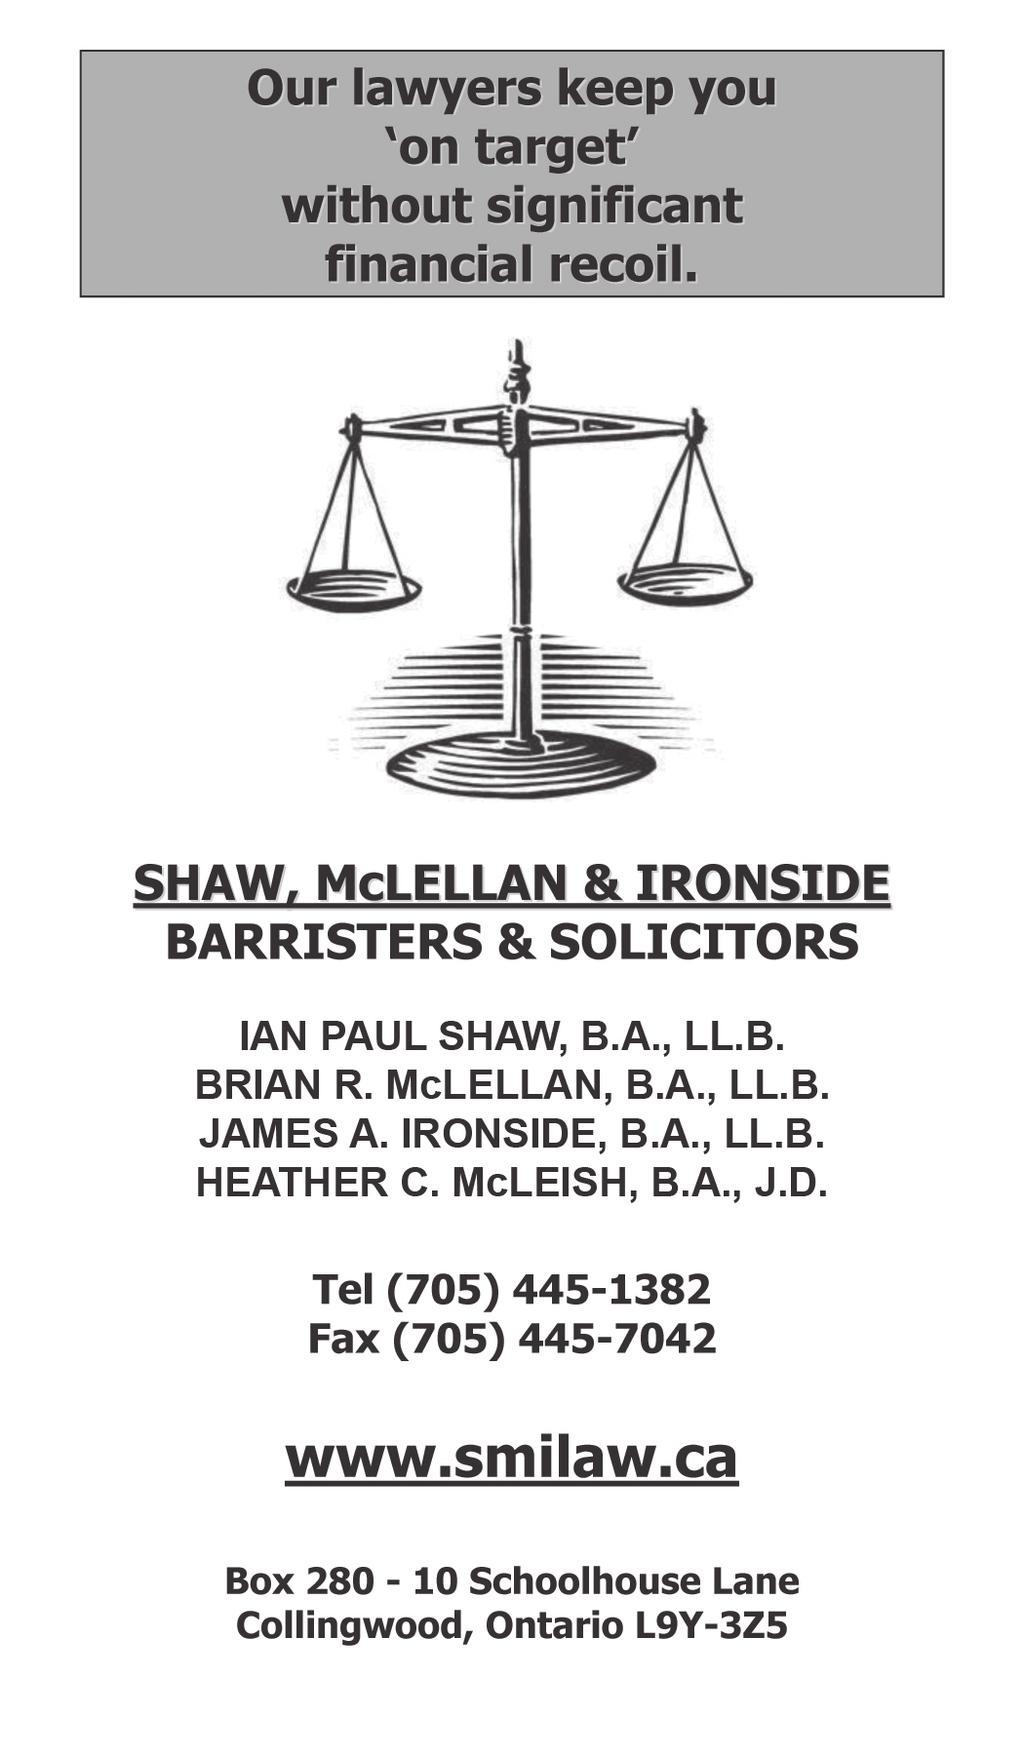 Shaw, McLellan BARRISTERS & SOLICITORS IAN PAUL SHAW, B.A., LL.B. BRIAN R. McLELLAN, B.A., LL.B. Tel (705) 445-1382 Fax (705) 445-7042 www.